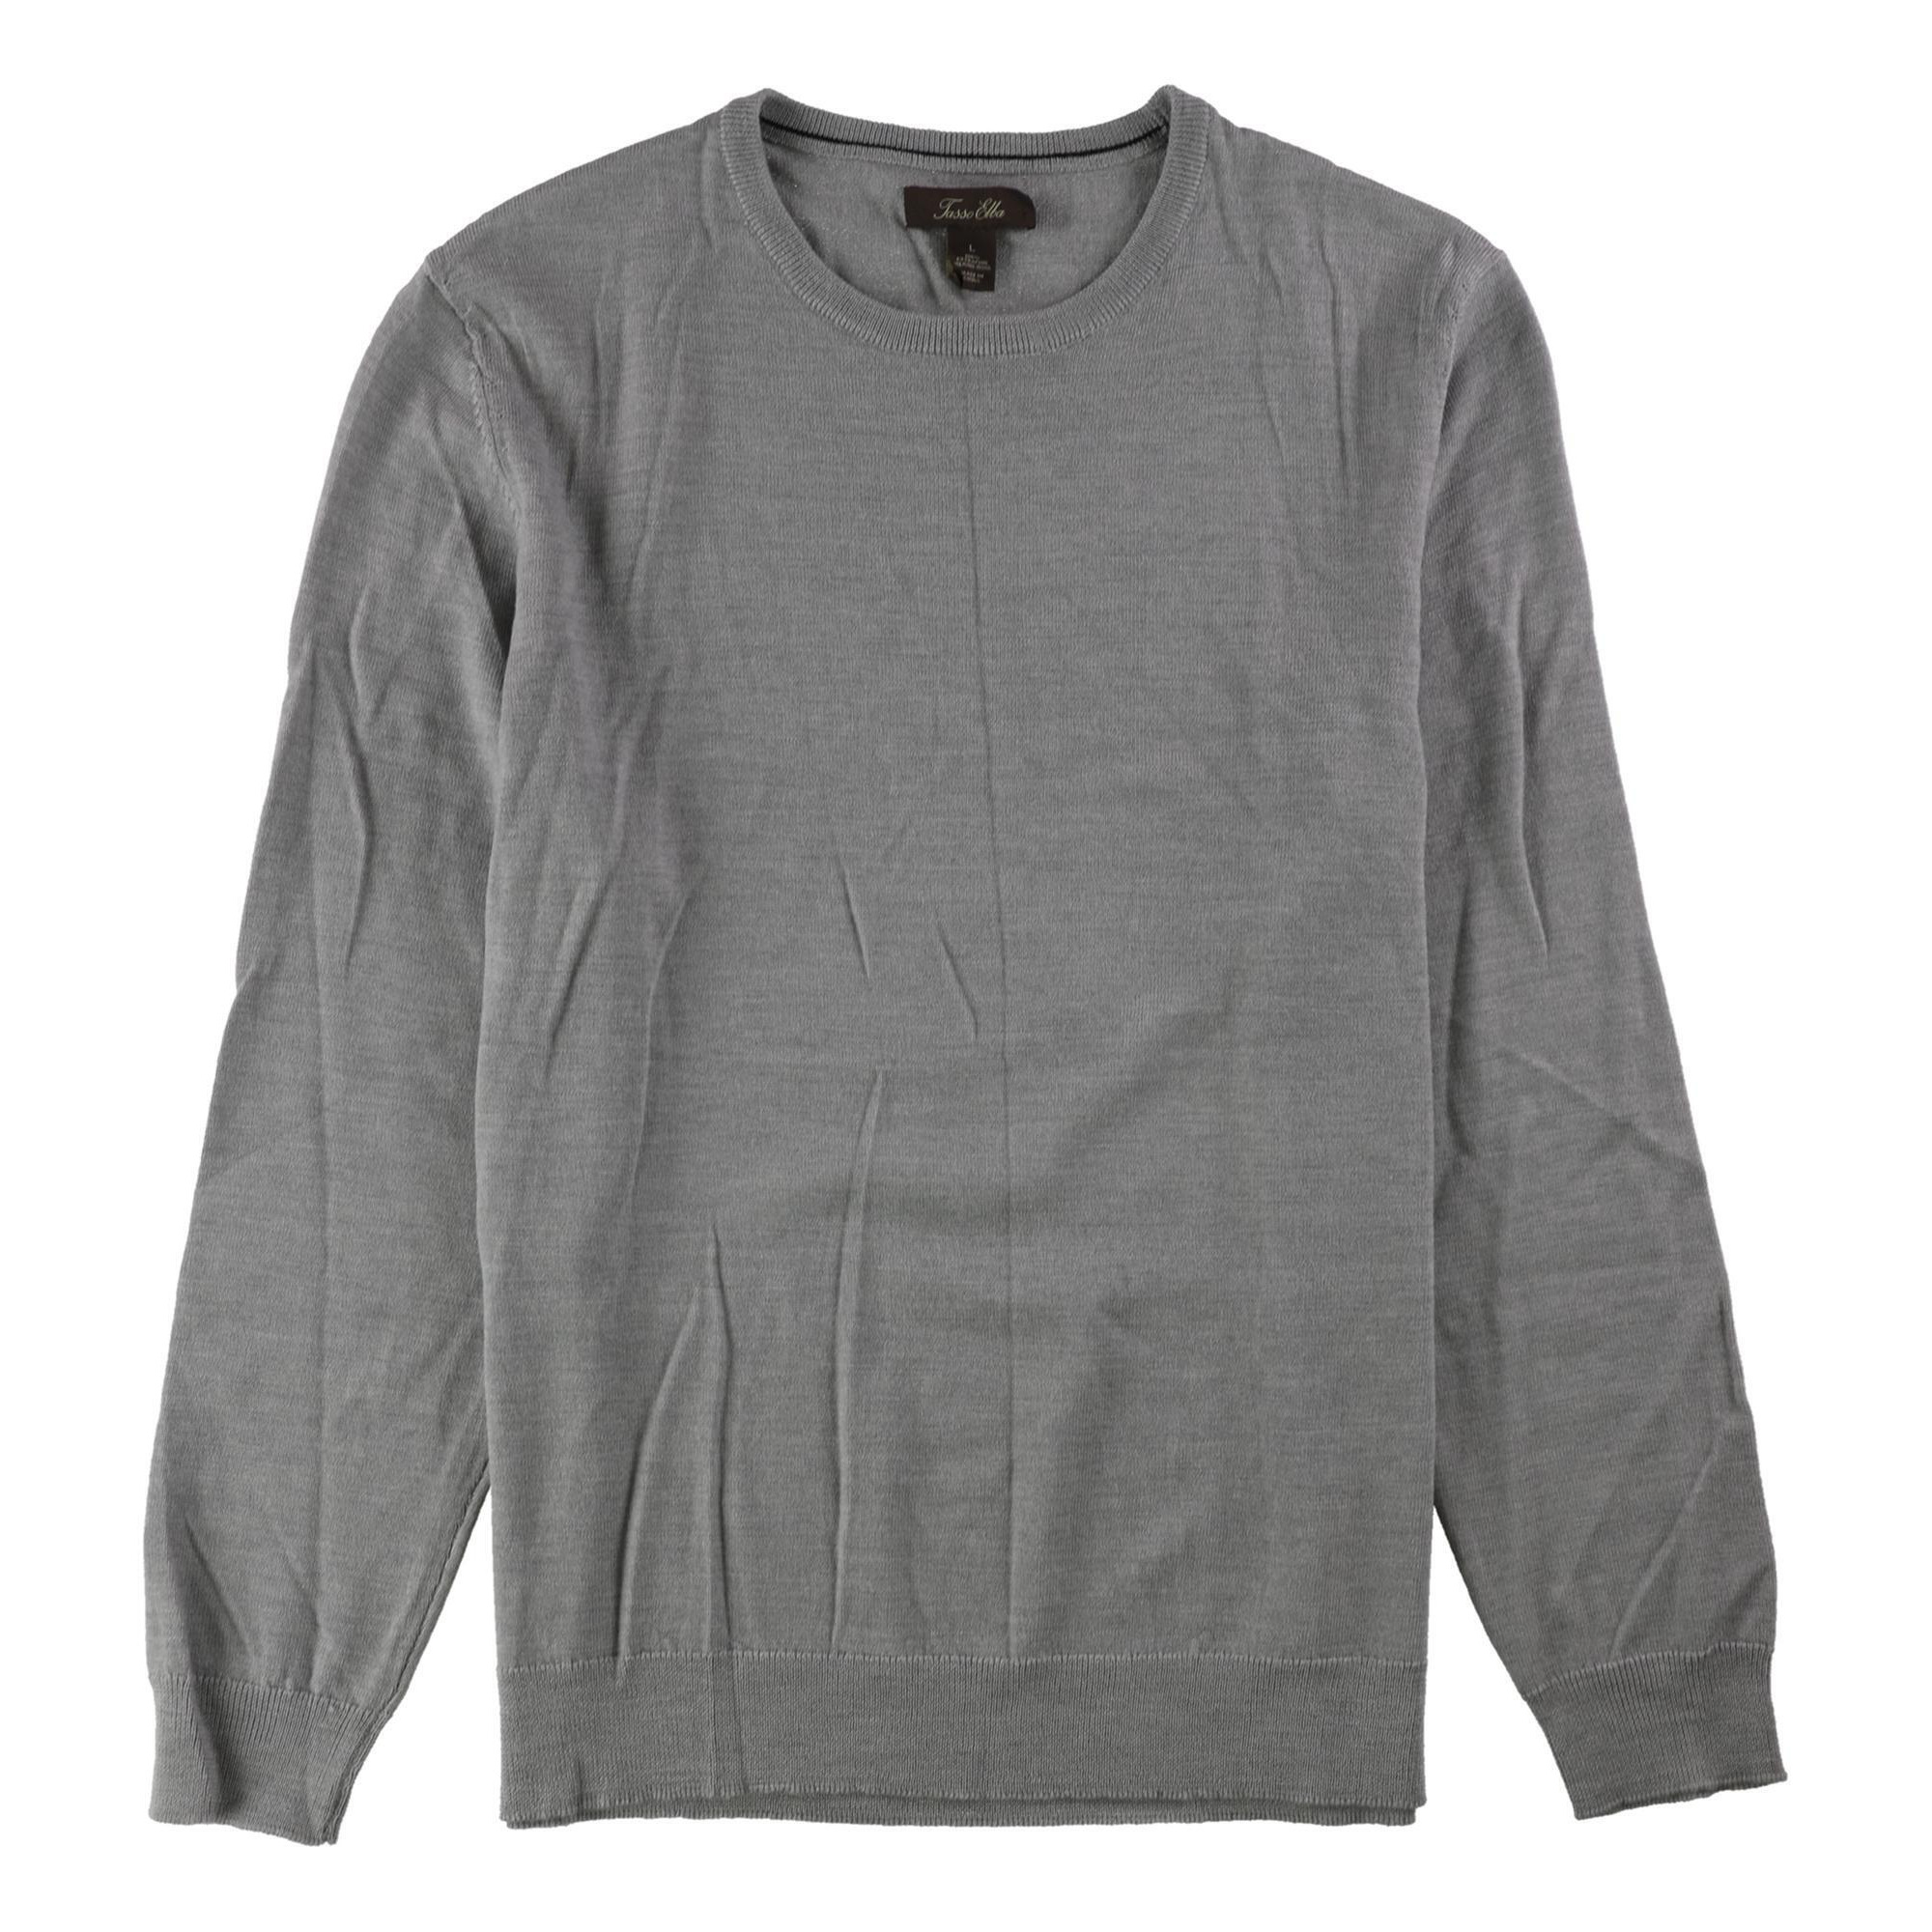 Tasso Elba Mens LS Pullover Sweater, Style # 100026859MN